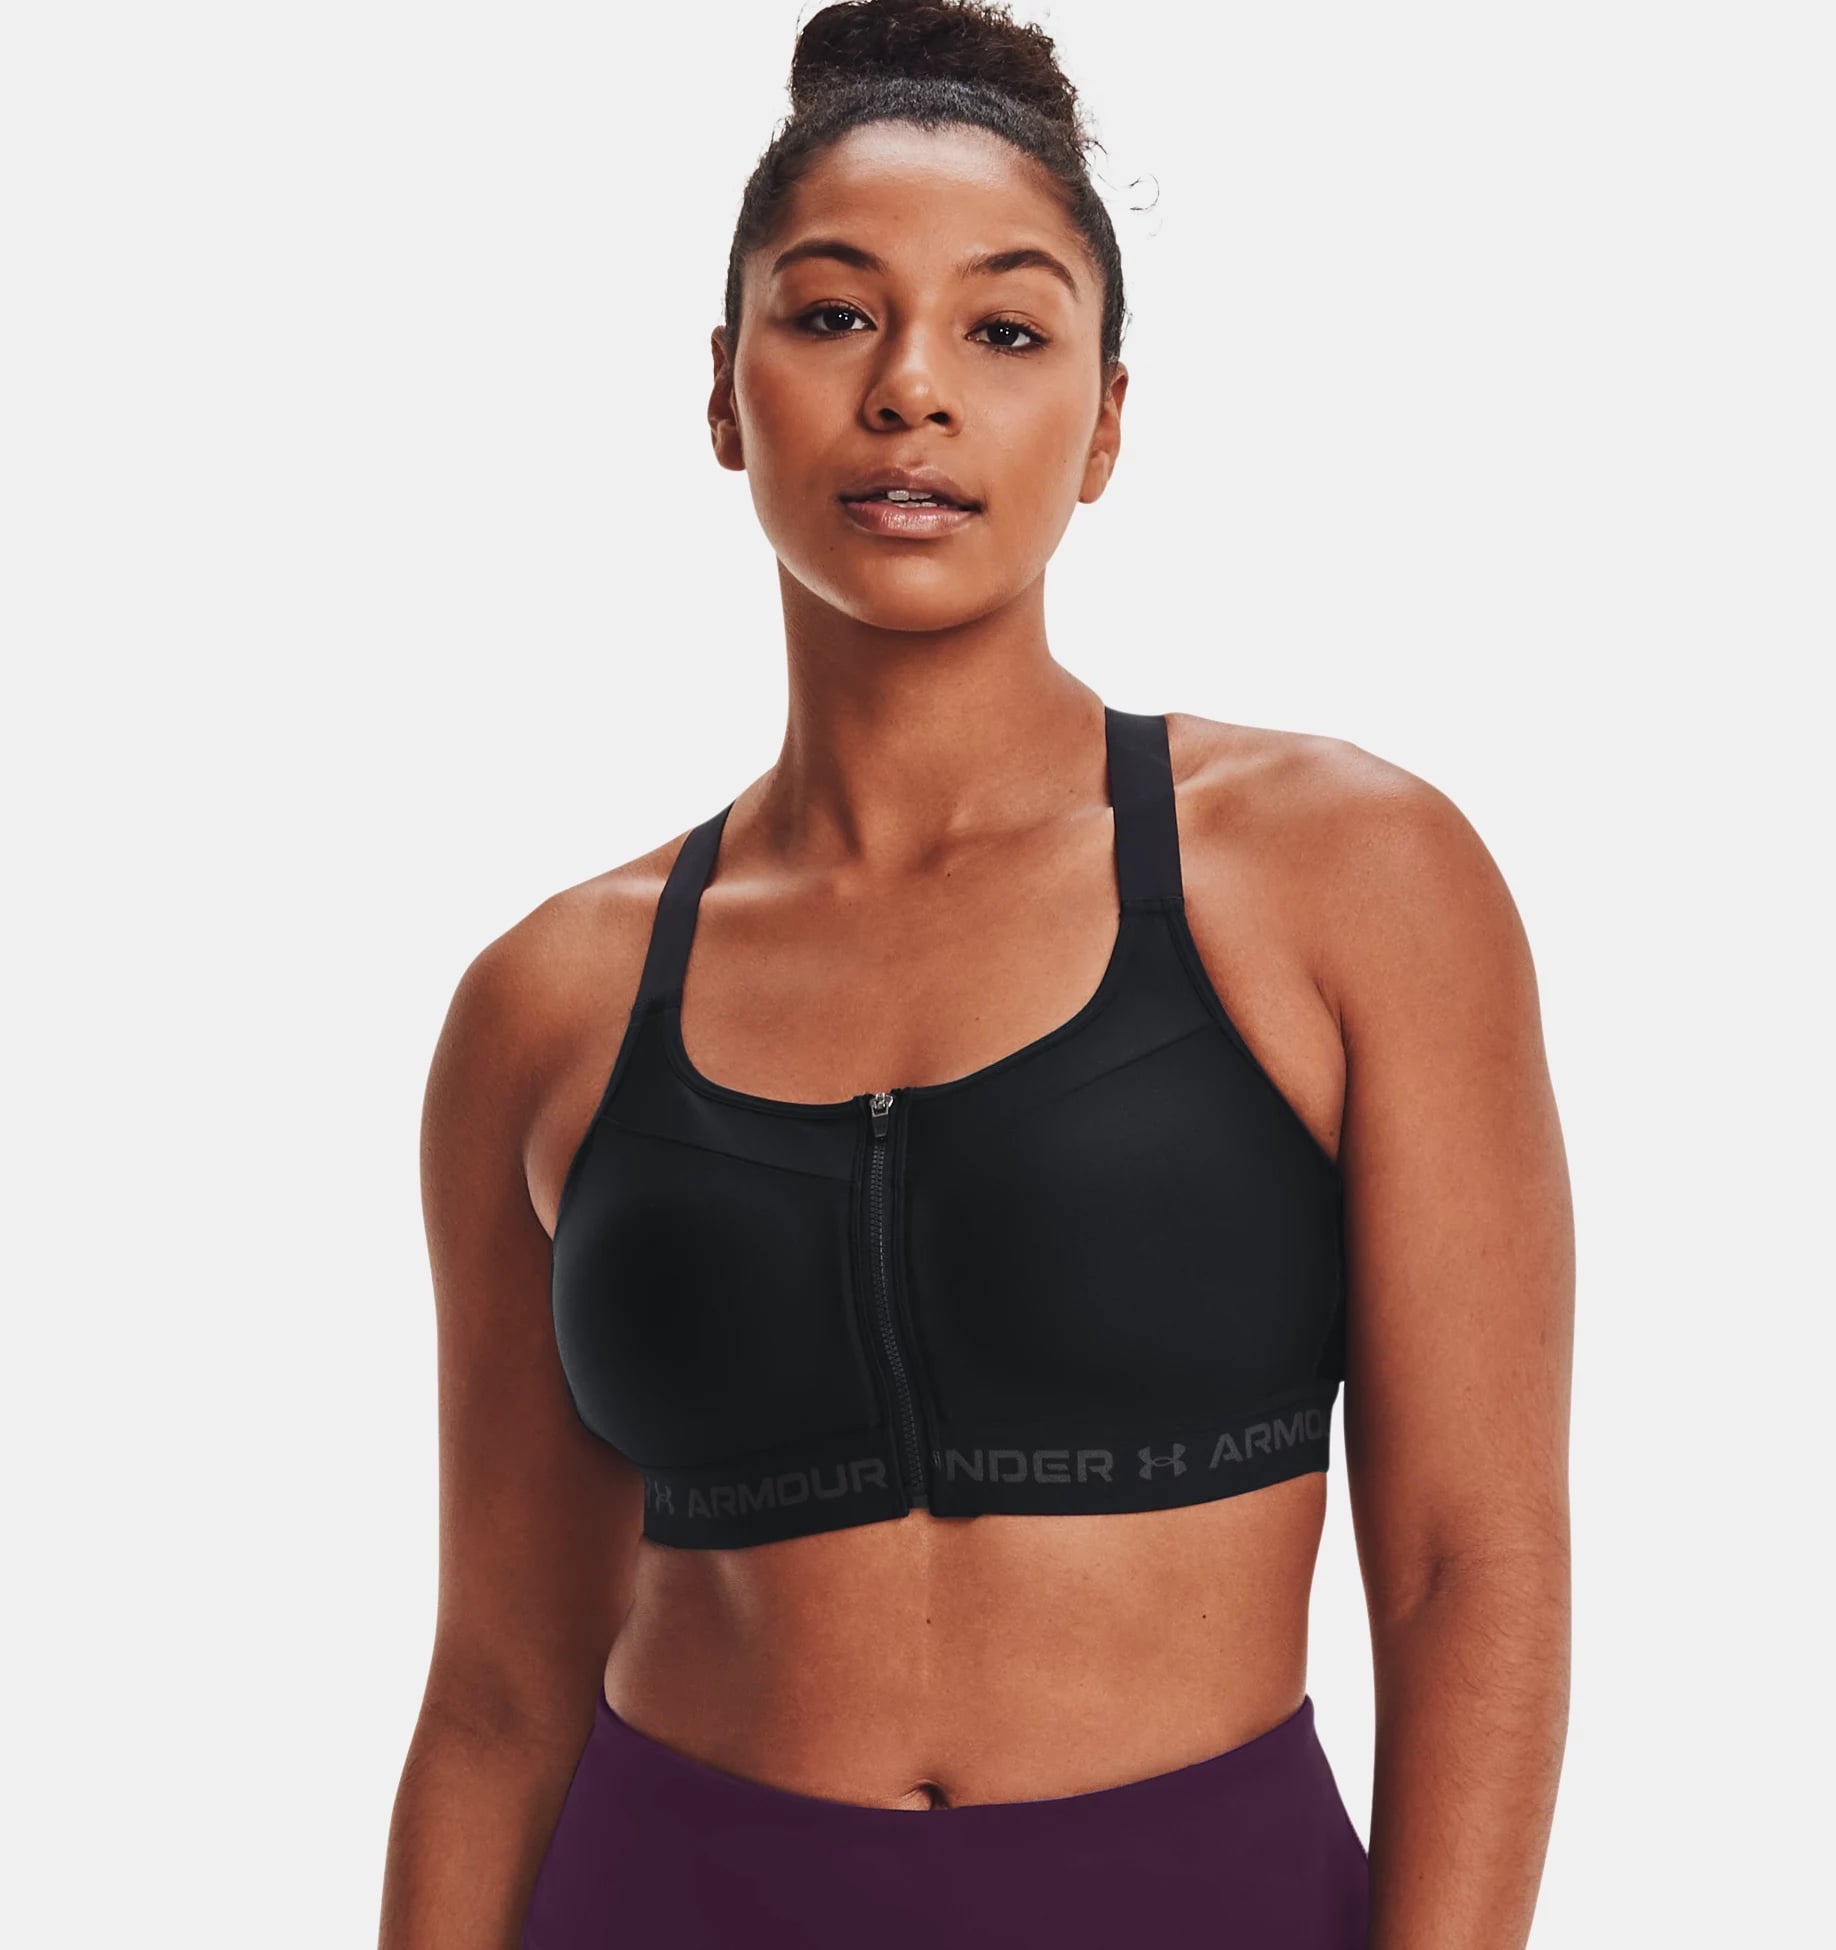 NiGHT LiONS TECH Sports Bras for Women Racerback Wireless Seamless Front Close Yoga Gym Workout Bra with Zipper 